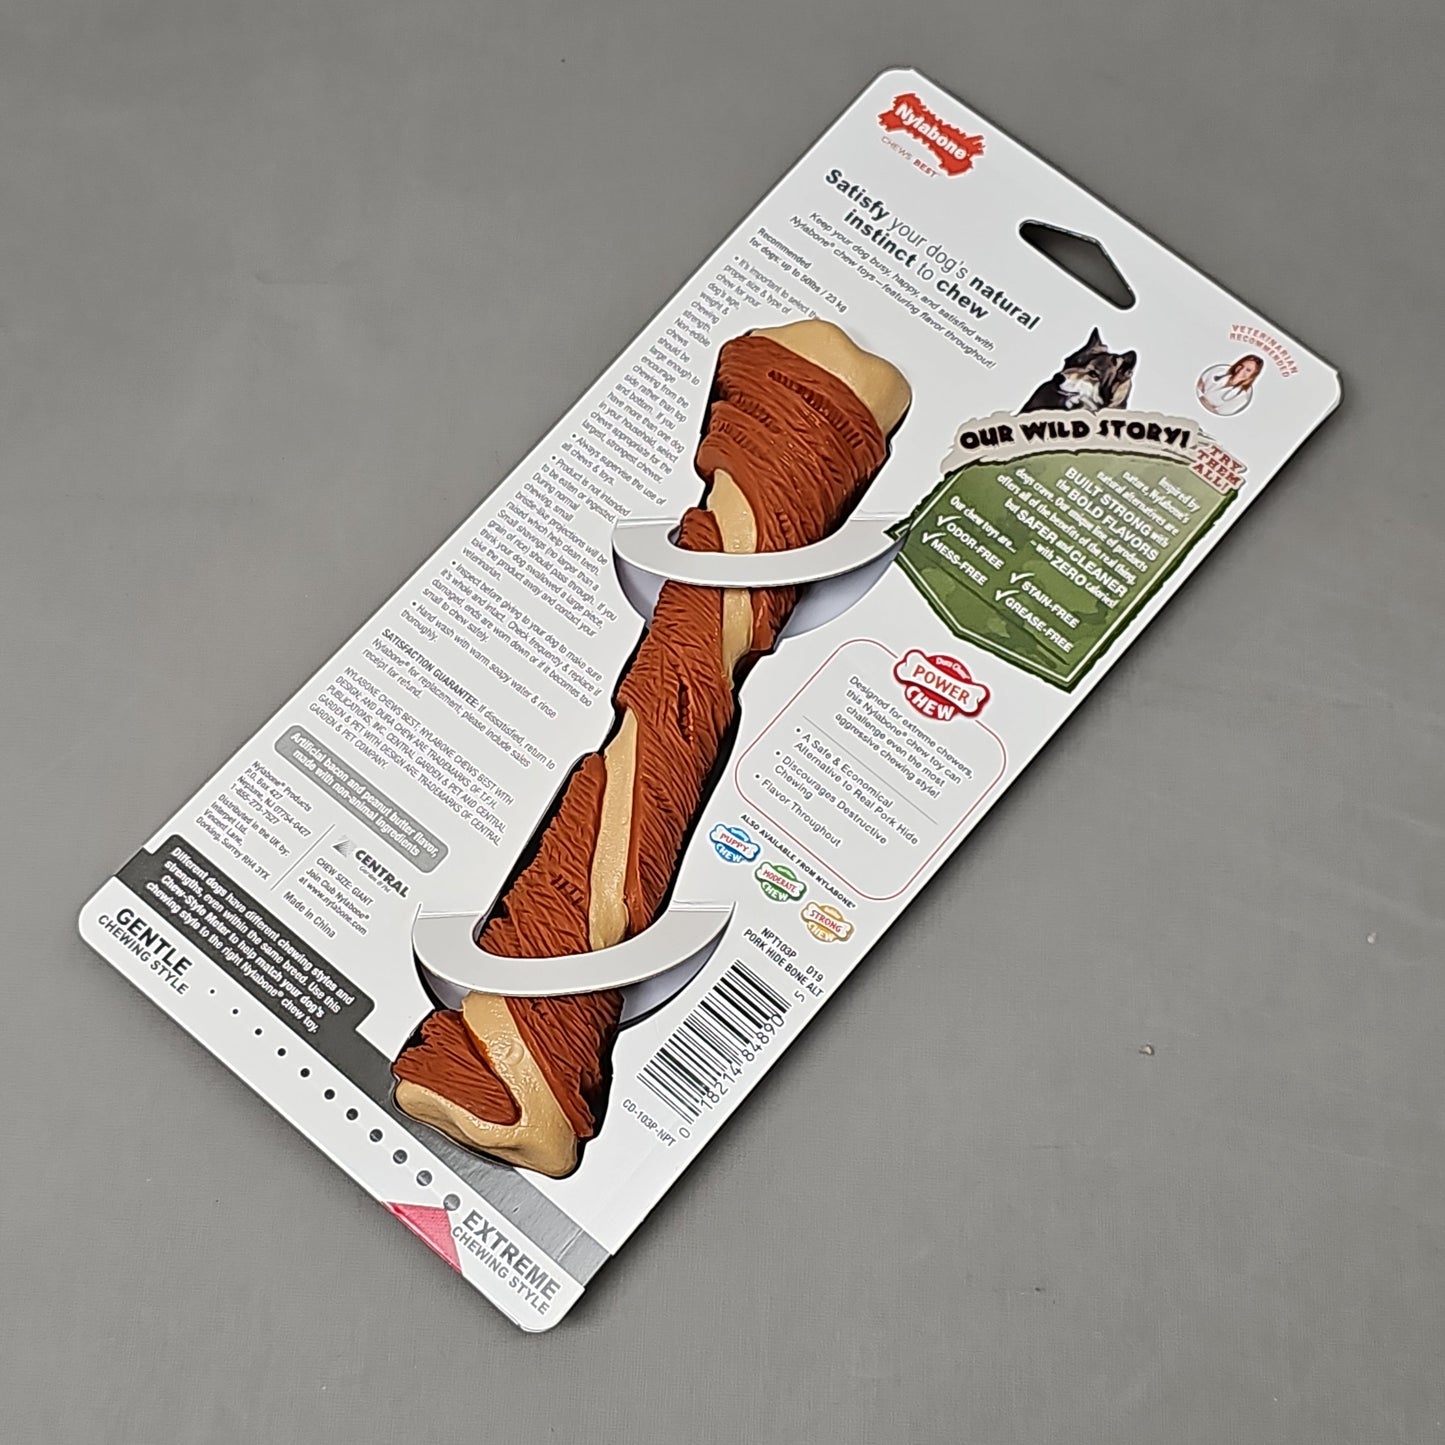 z@ NYLABONE Power Chew Pork Hide Bone Alternative Dog Chew Toys Bacon & Peanut Butter NPT103P (New)